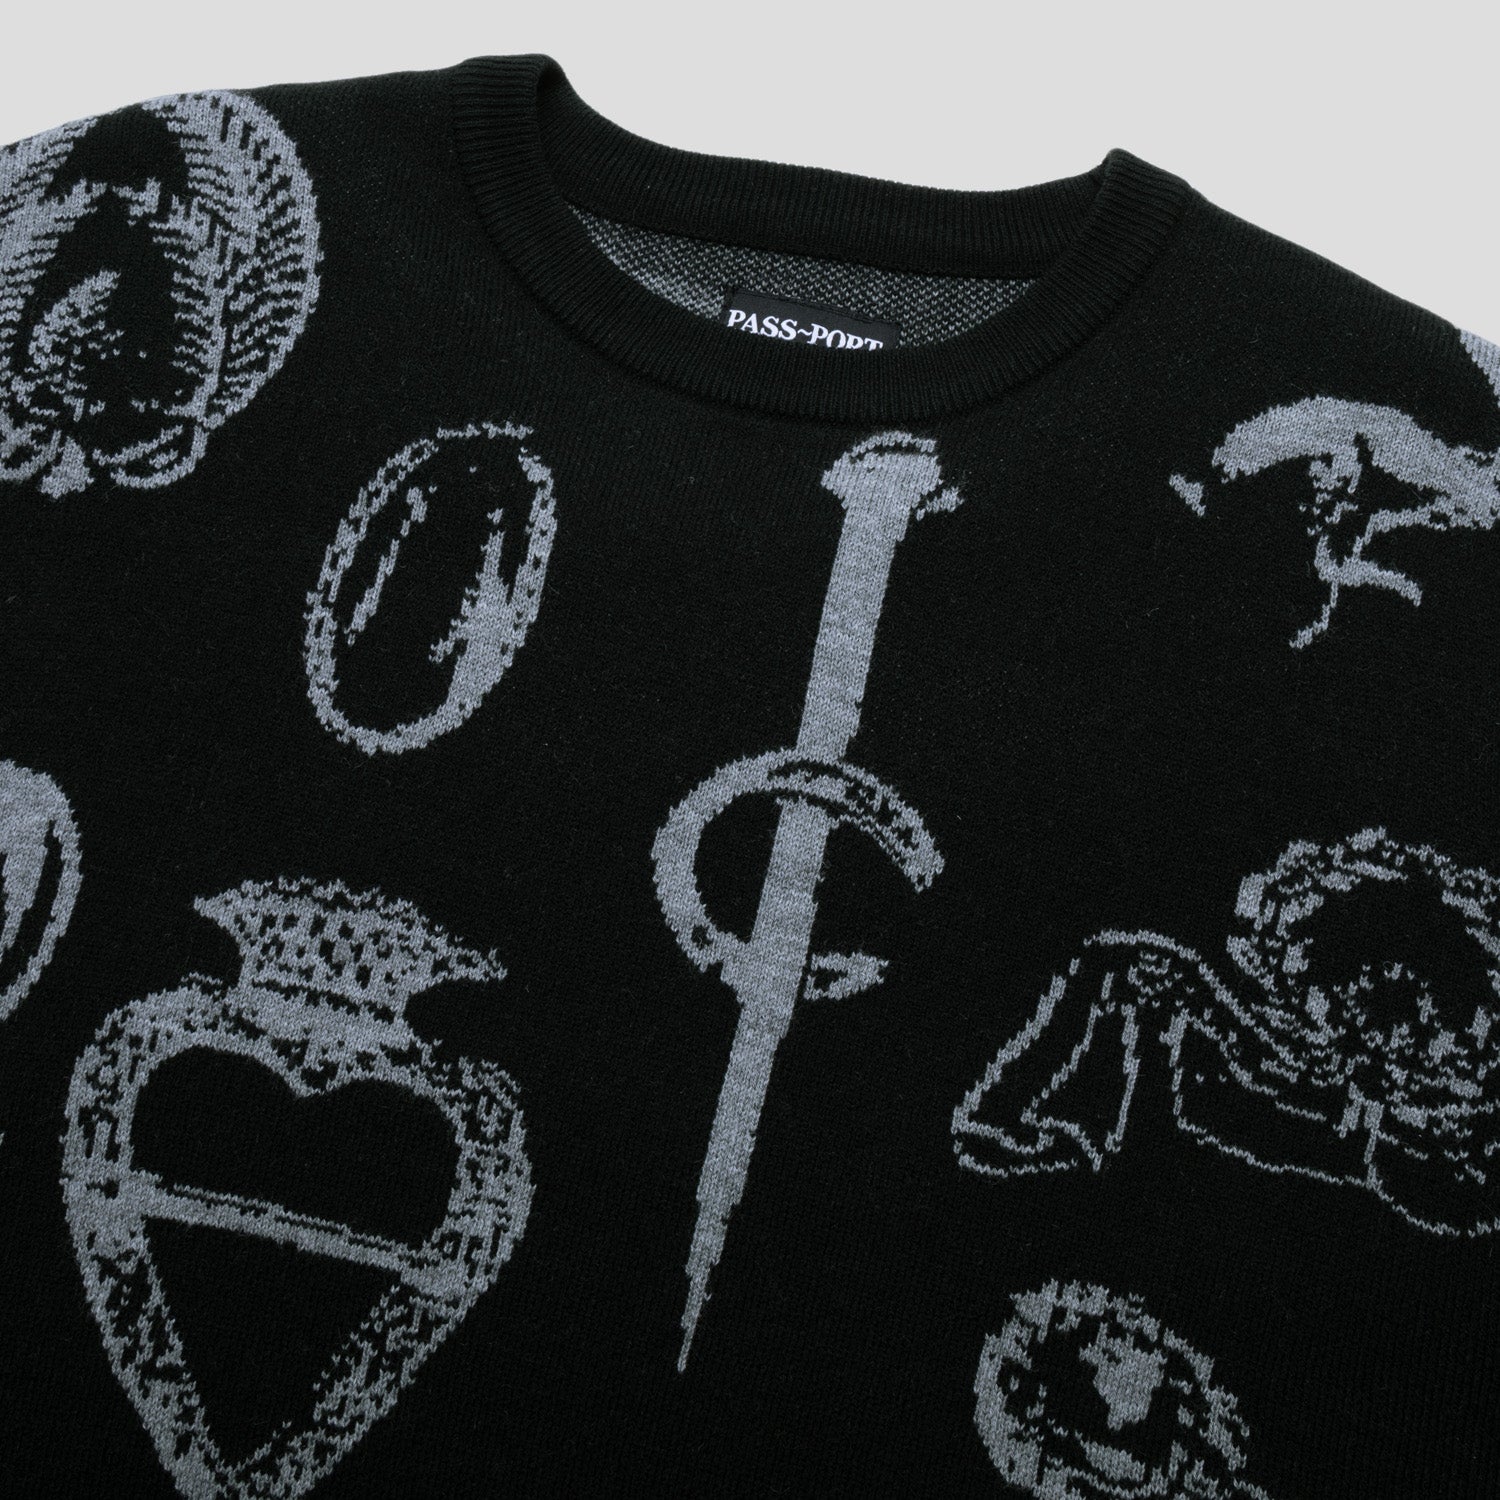 Trinkets Knit Sweater (Black)